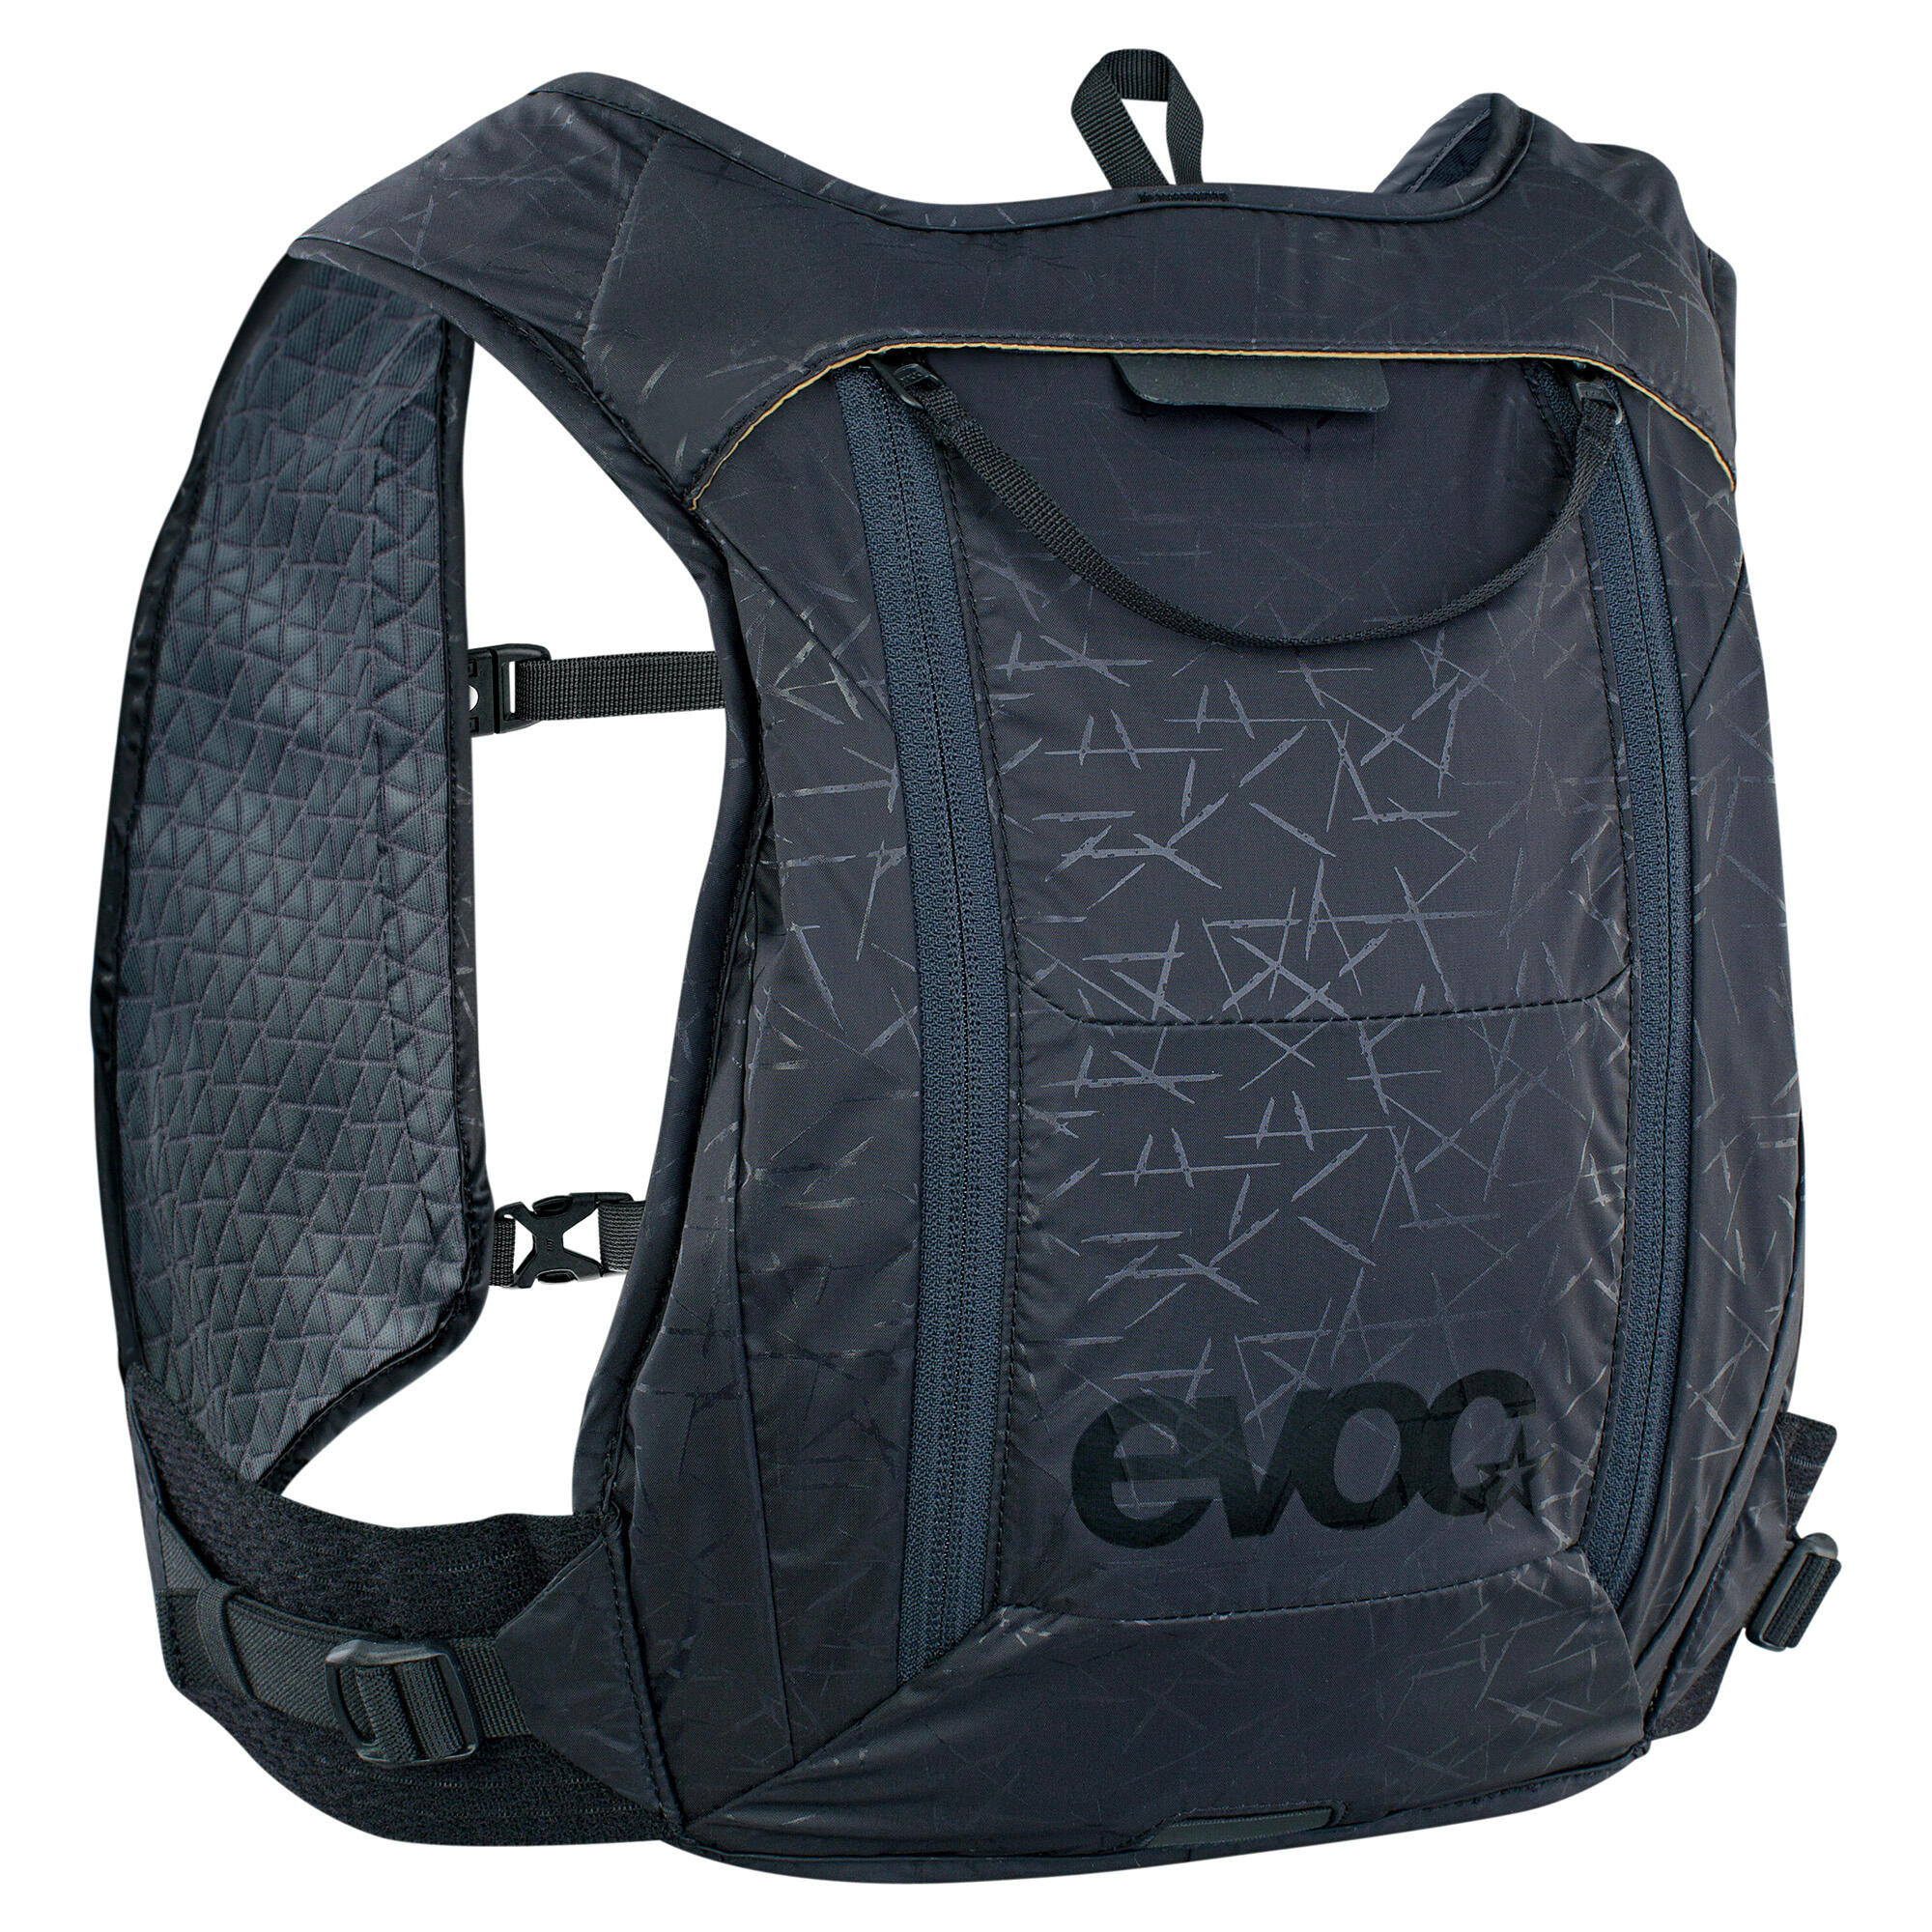 EVOC EVOC Hydro Pro Hydration Pack